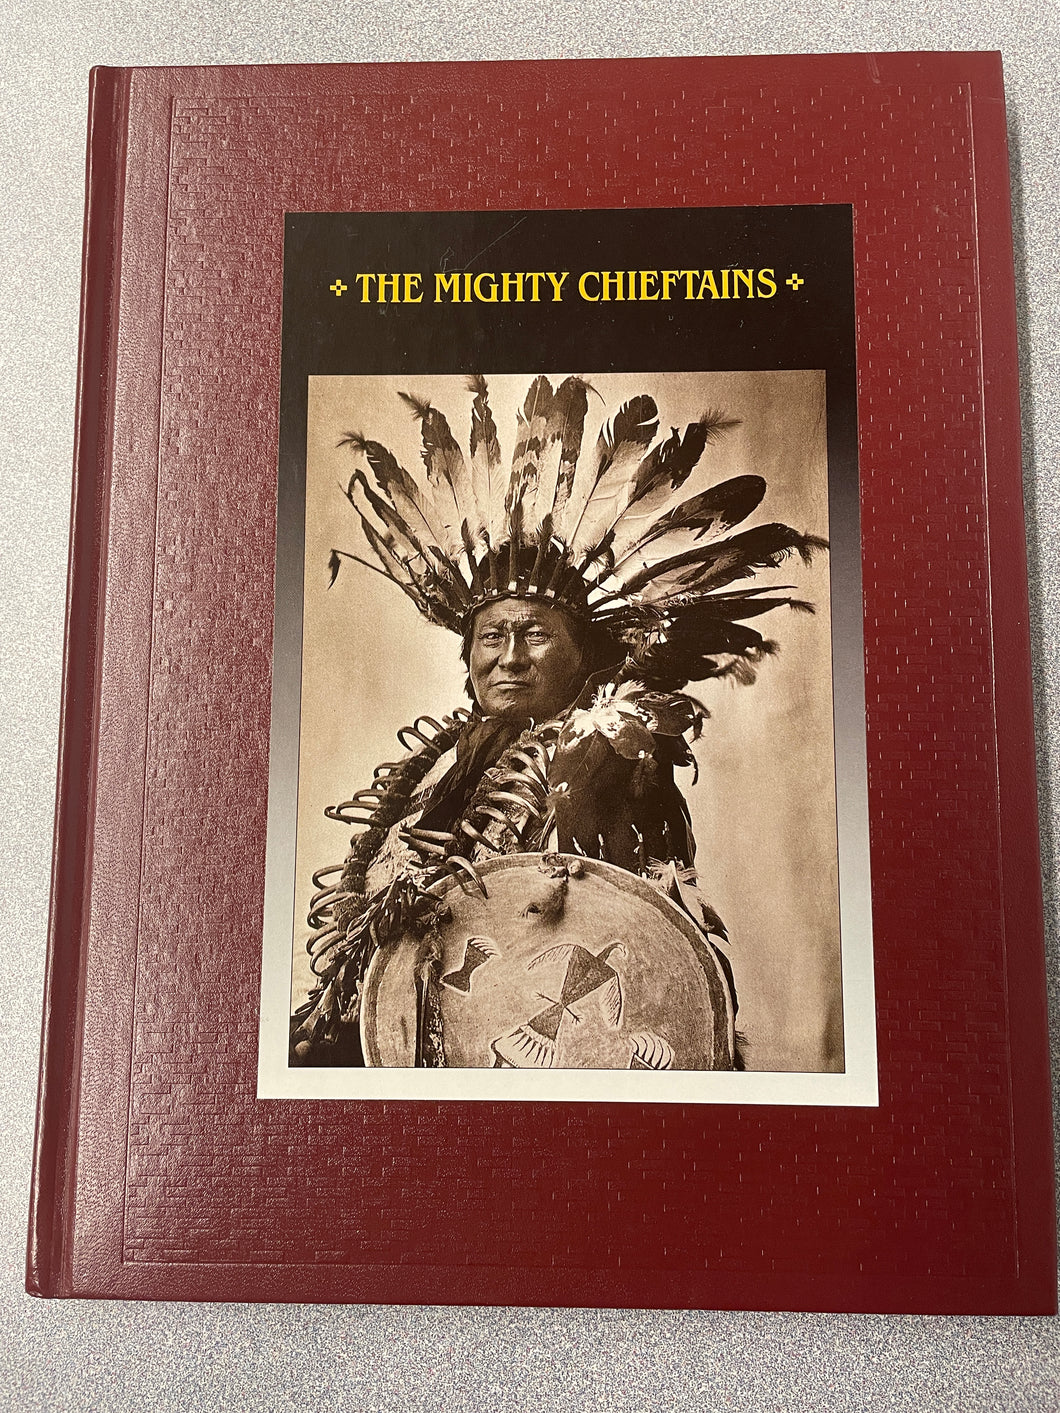 BI The Mighty Chieftains, Flaherty, Thomas H., ed. [1993] N 3/24